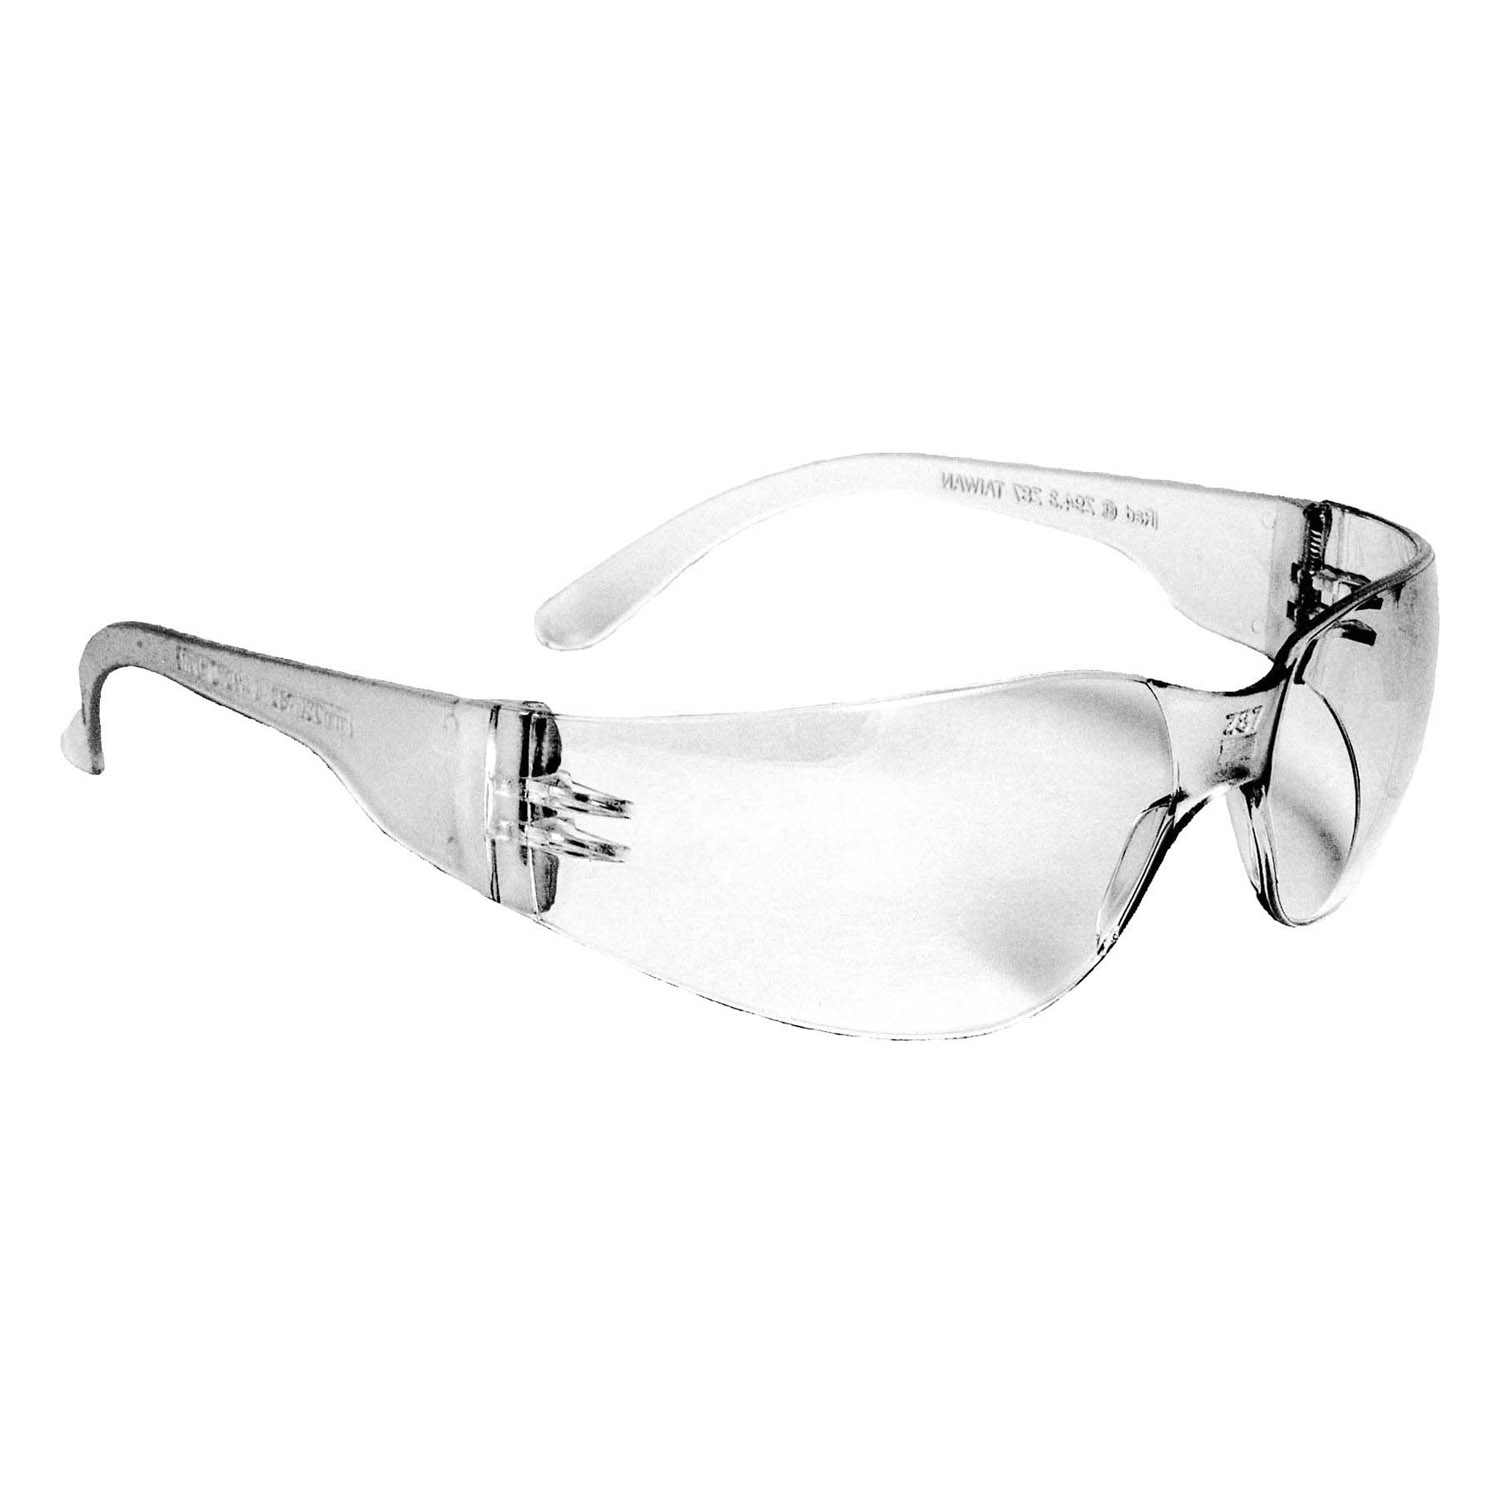 Radians Barricade Smoke/Gray Anti Fog Safety Goggles Glasses Lightweight Z87+ 